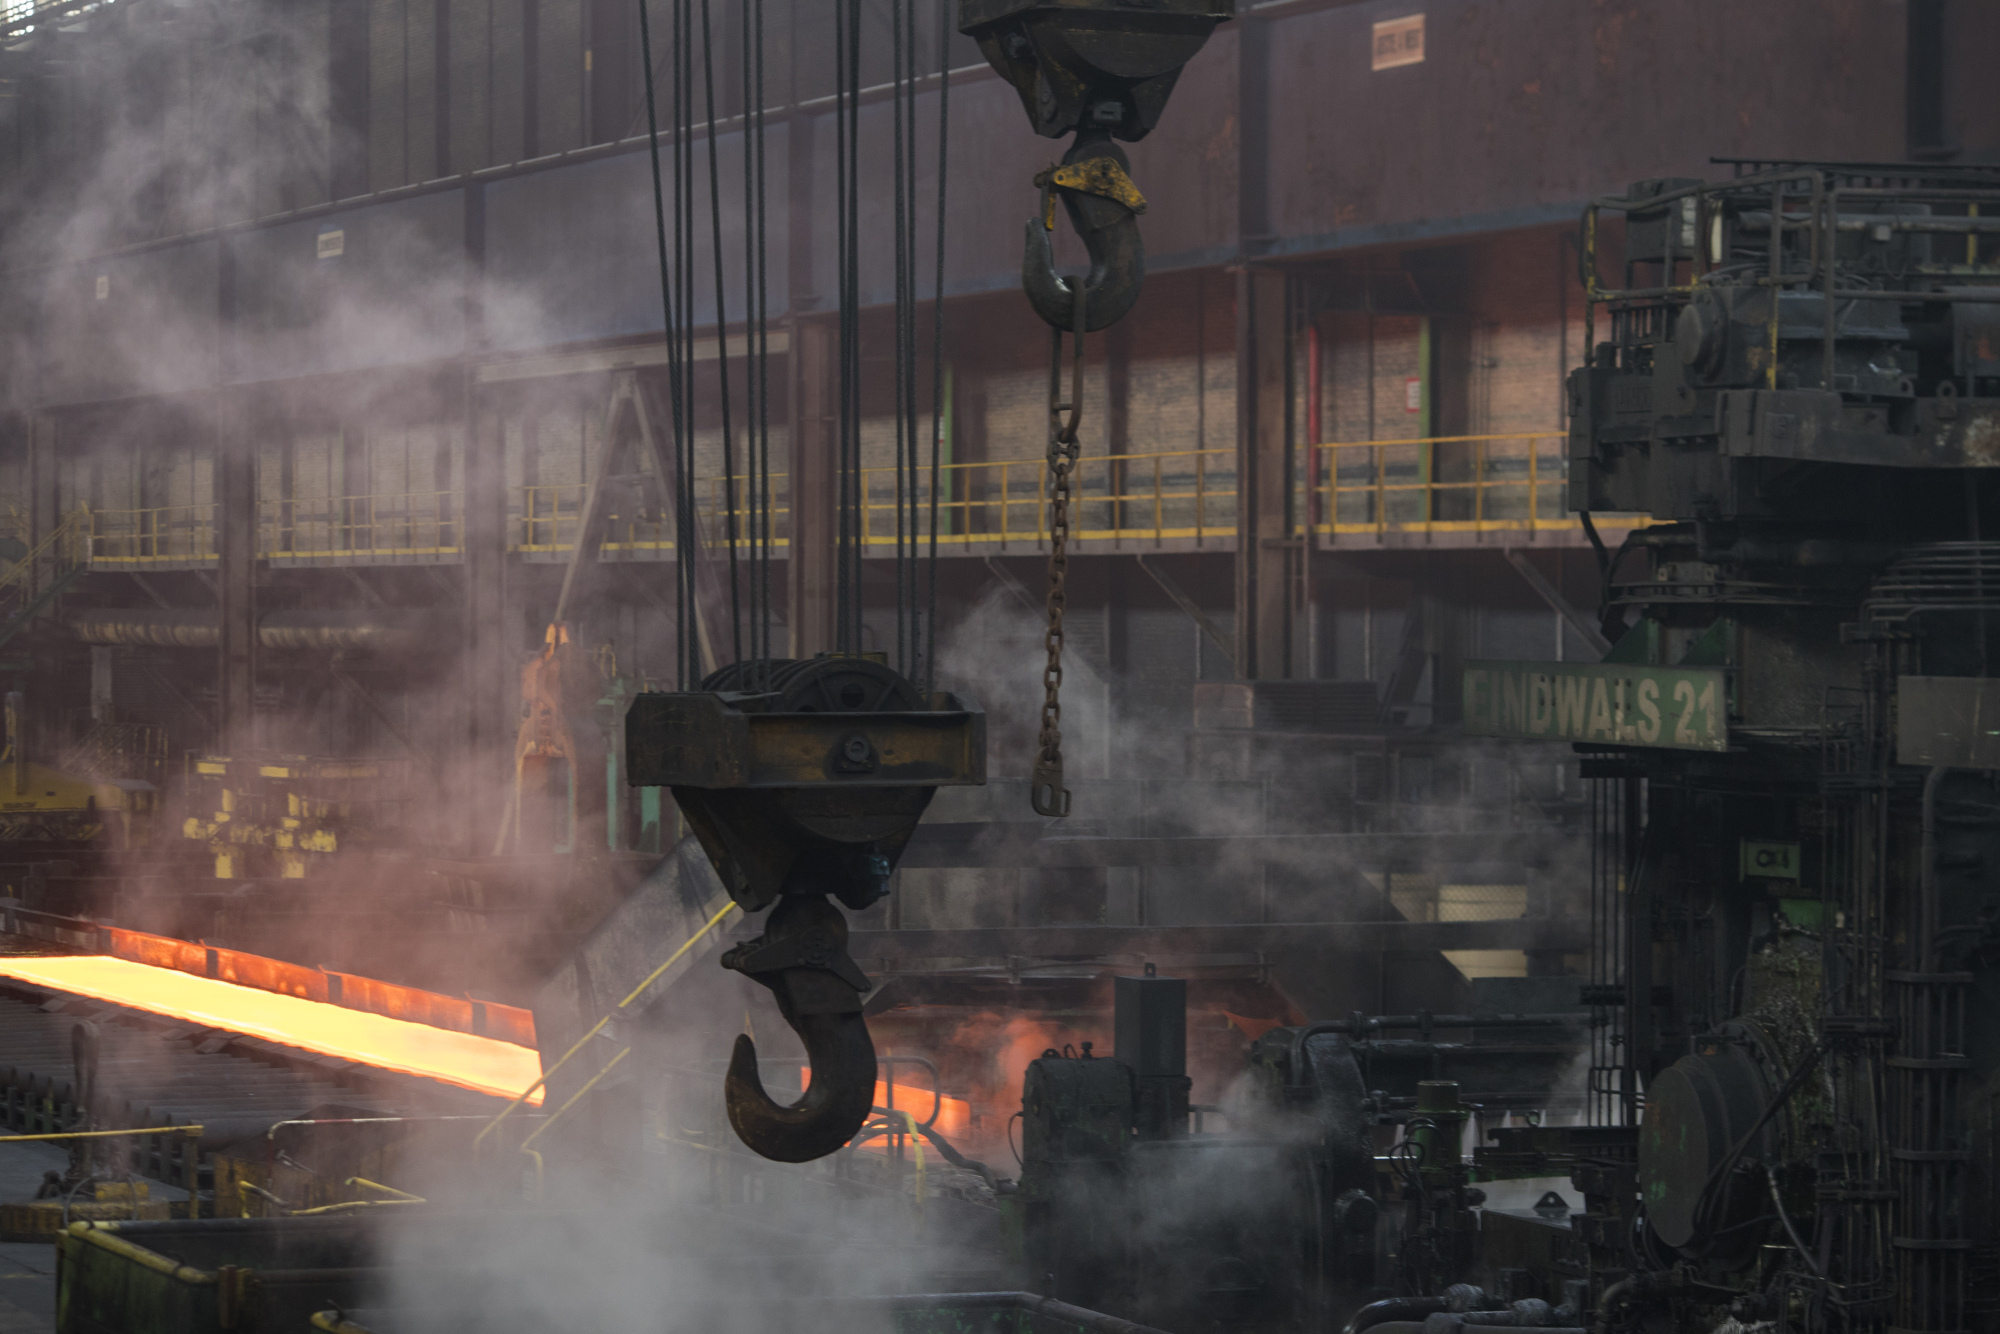 Dutch Prosecutors Inspect Tata Steel Site in Pollution Probe